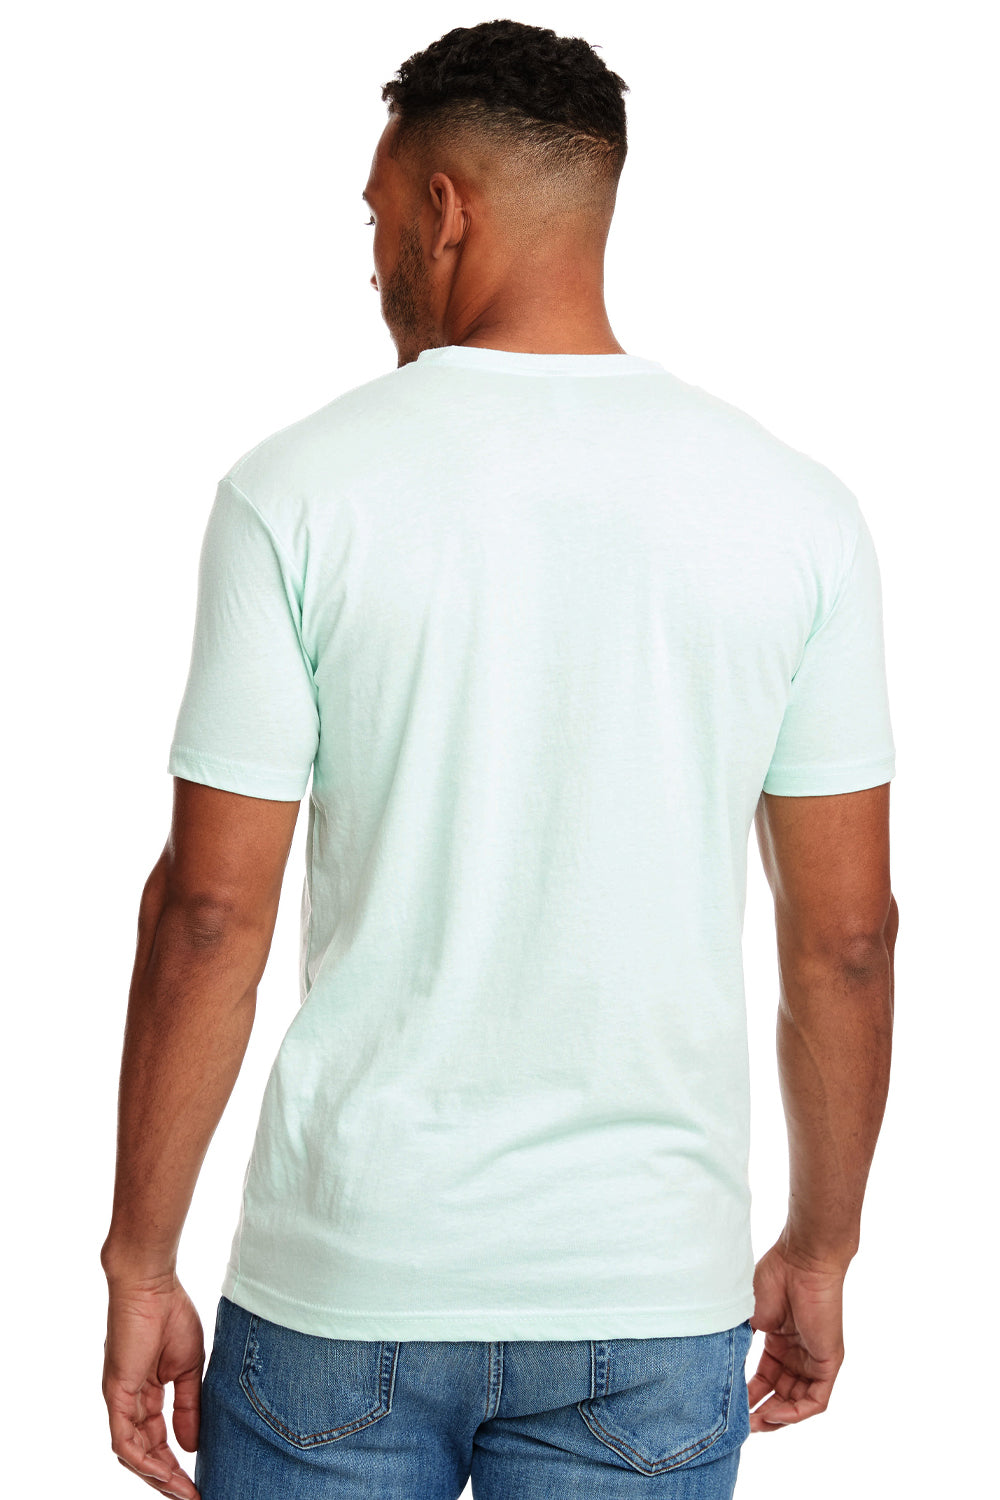 Next Level N6210 Mens CVC Jersey Short Sleeve Crewneck T-Shirt Mint Green Back